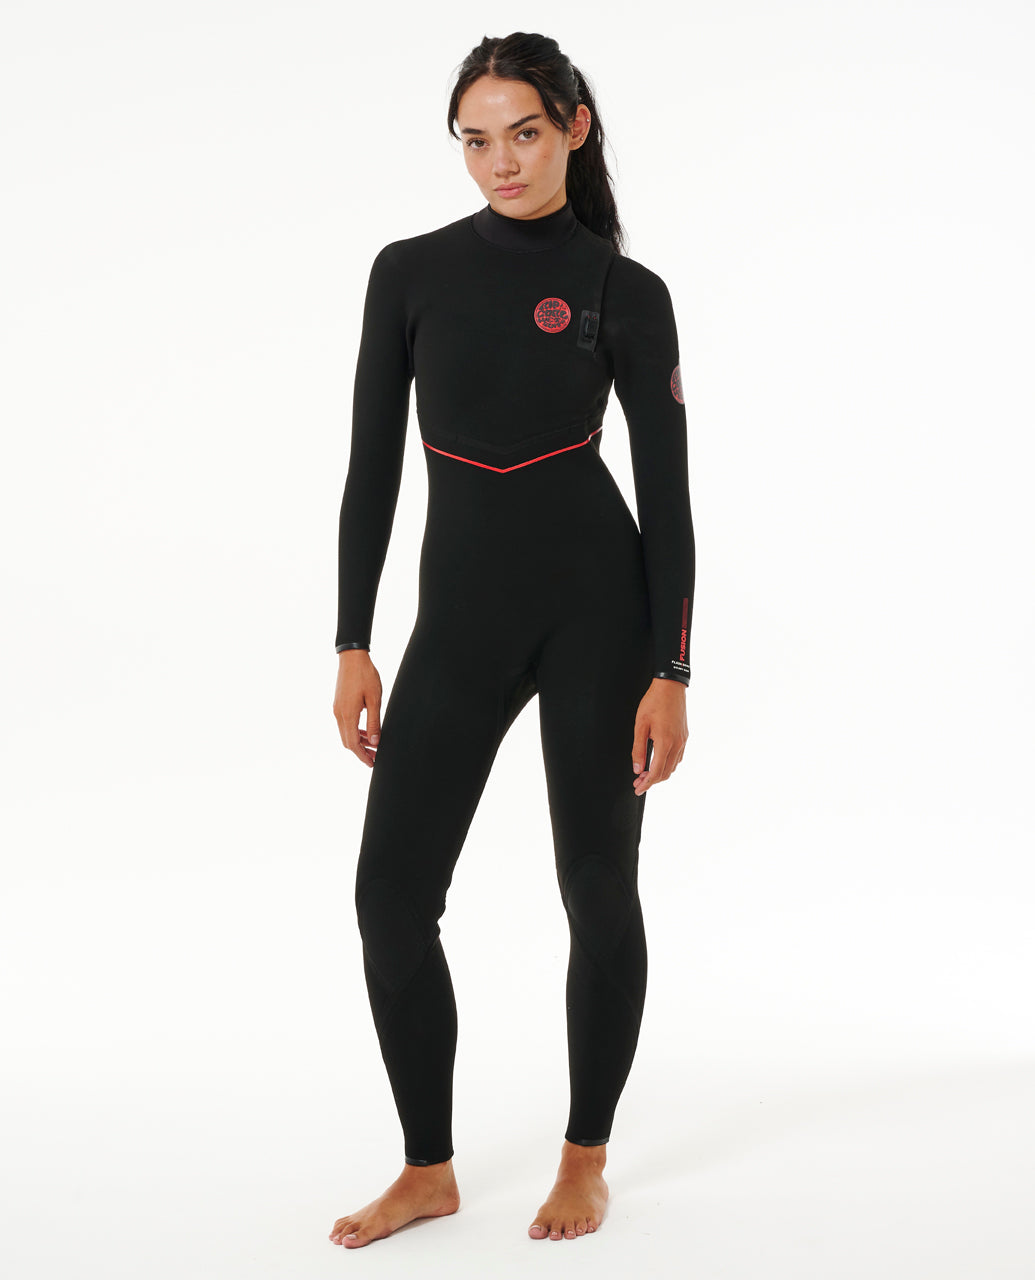 Womens Flashbomb Fusion 3/2 Steamer Wetsuit - Black